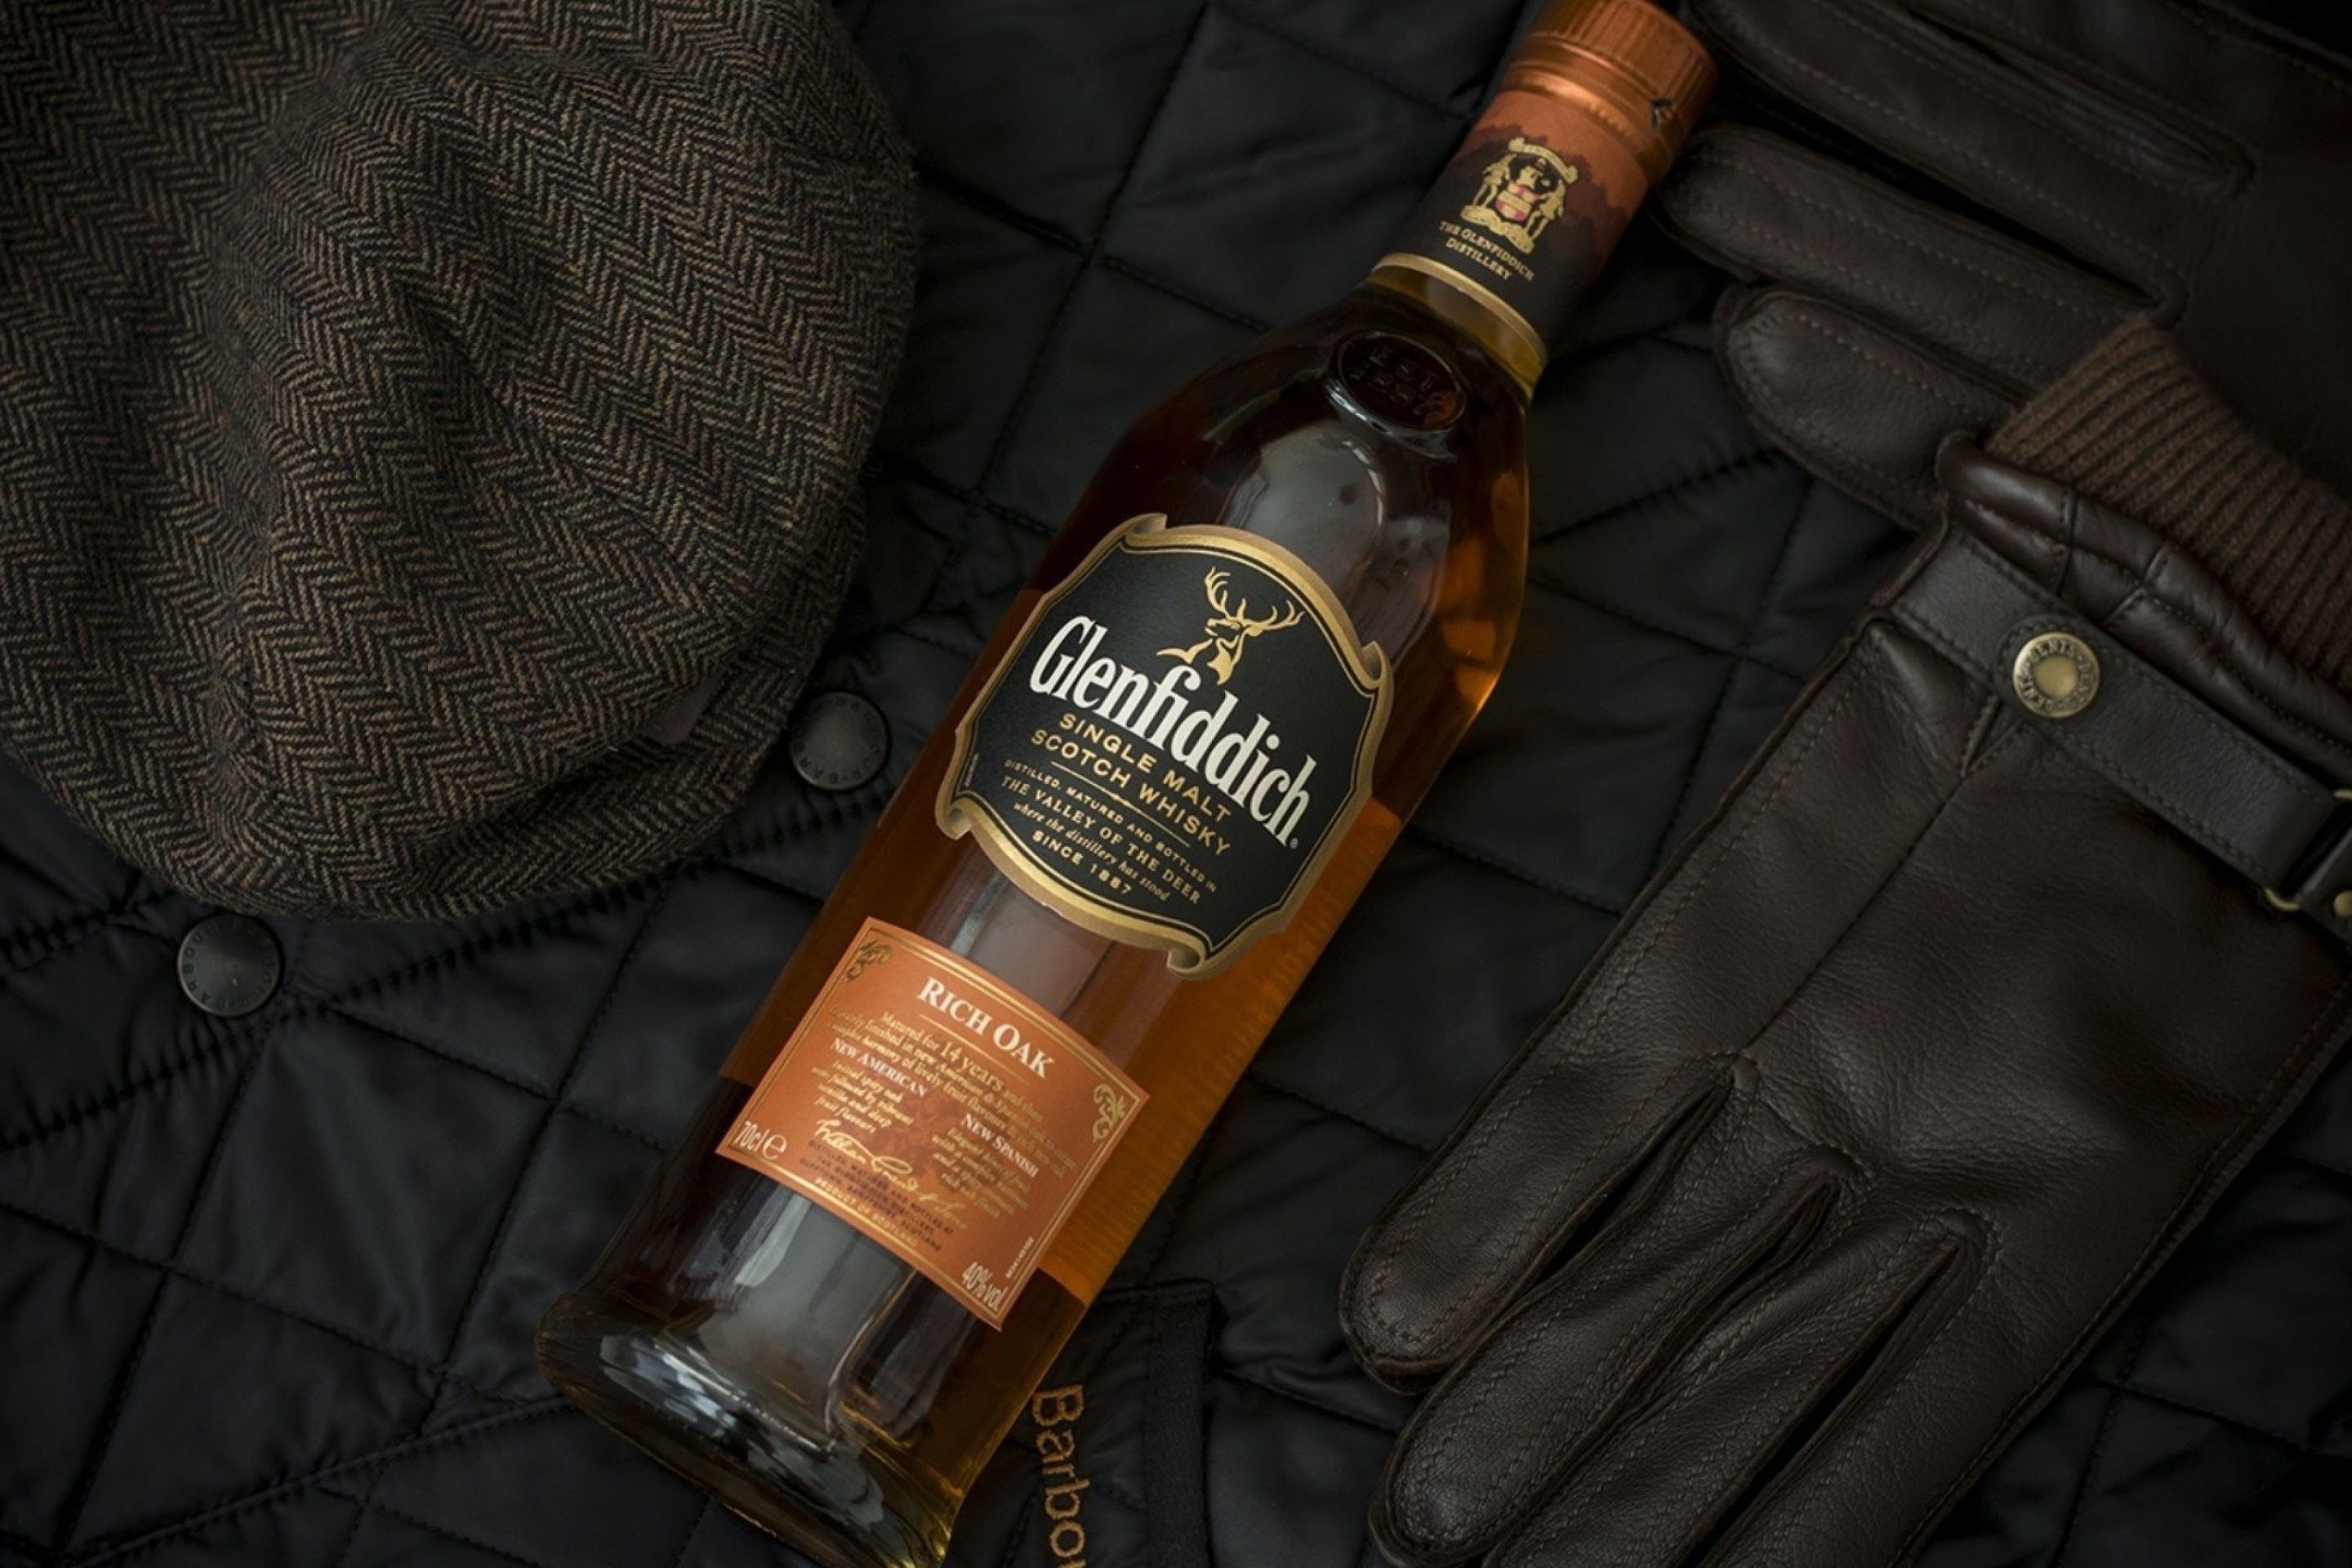 Glenfiddich single malt Scotch Whisky wallpaper 2880x1920